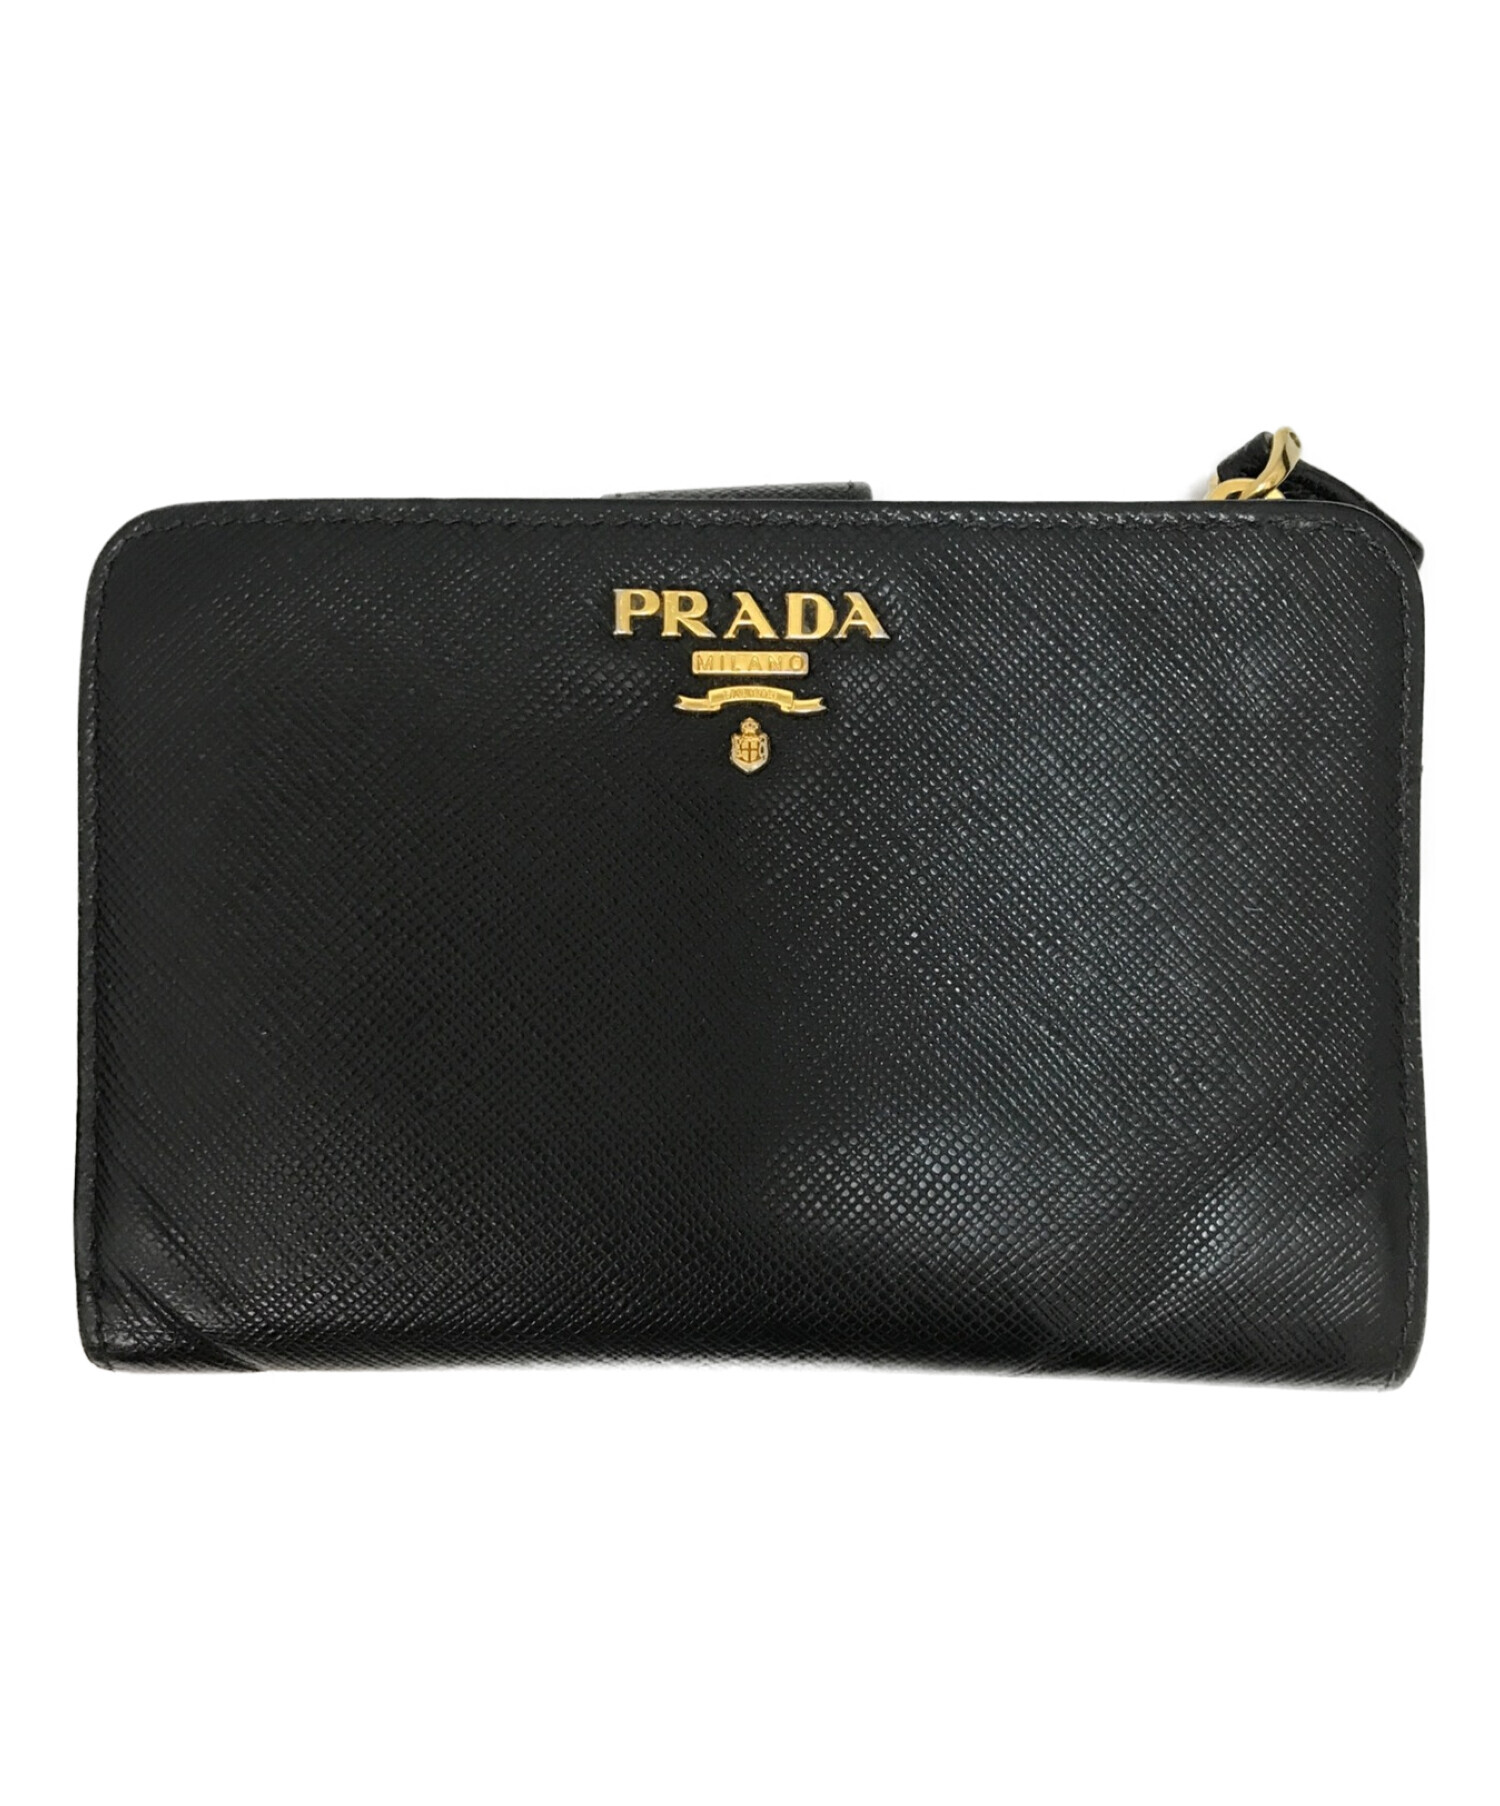 PRADA プラダ 二つ折り財布 ブラックファッション小物 - 折り財布